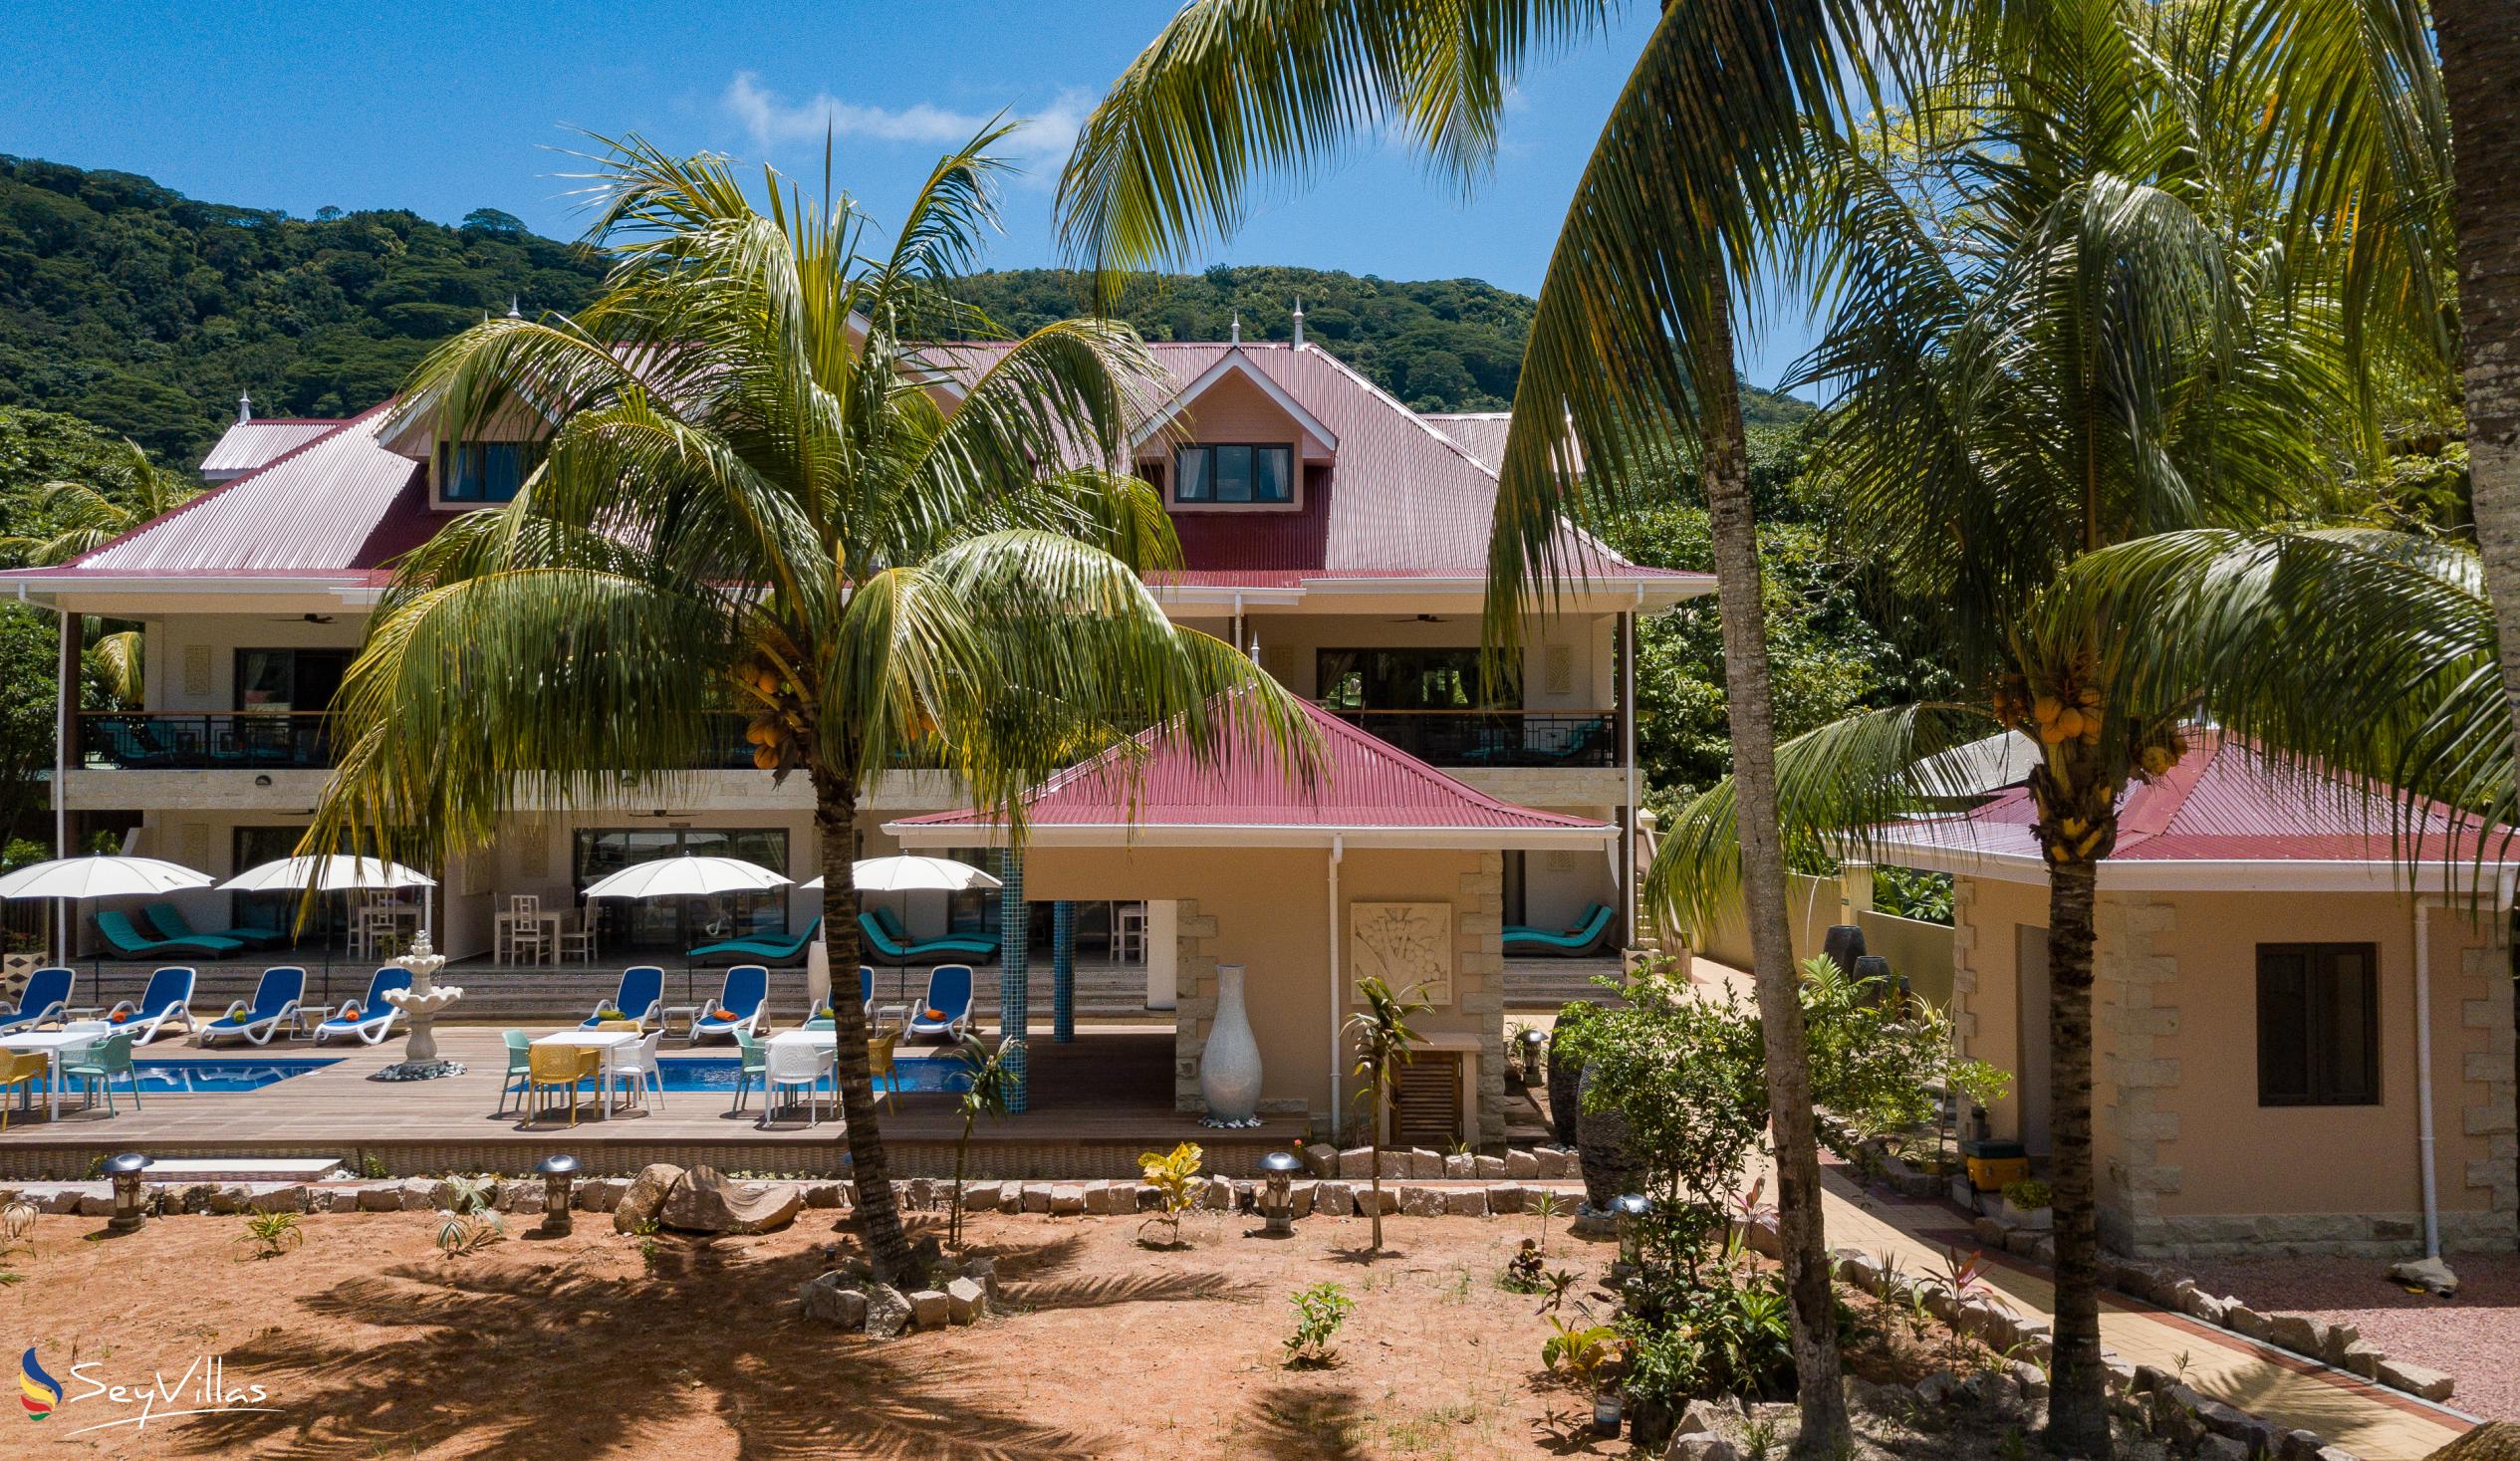 Foto 153: Casa de Leela - Aussenbereich - La Digue (Seychellen)